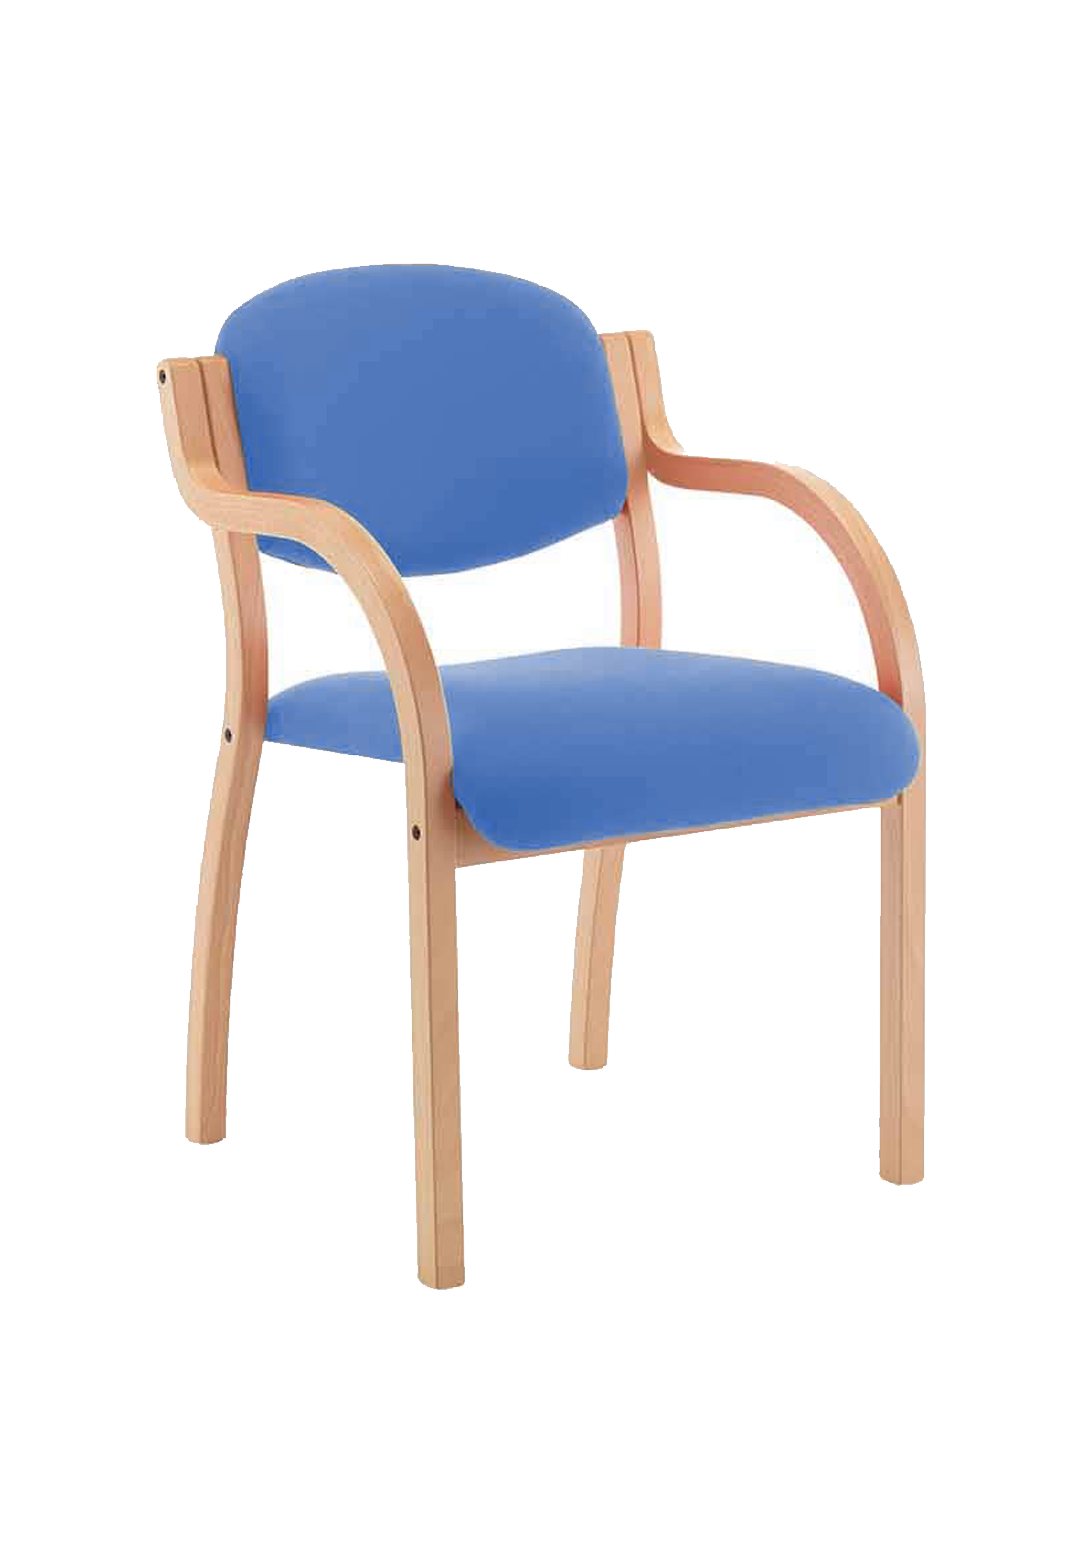 EARLWOOD 4 Legged Meeting Chair with Arms